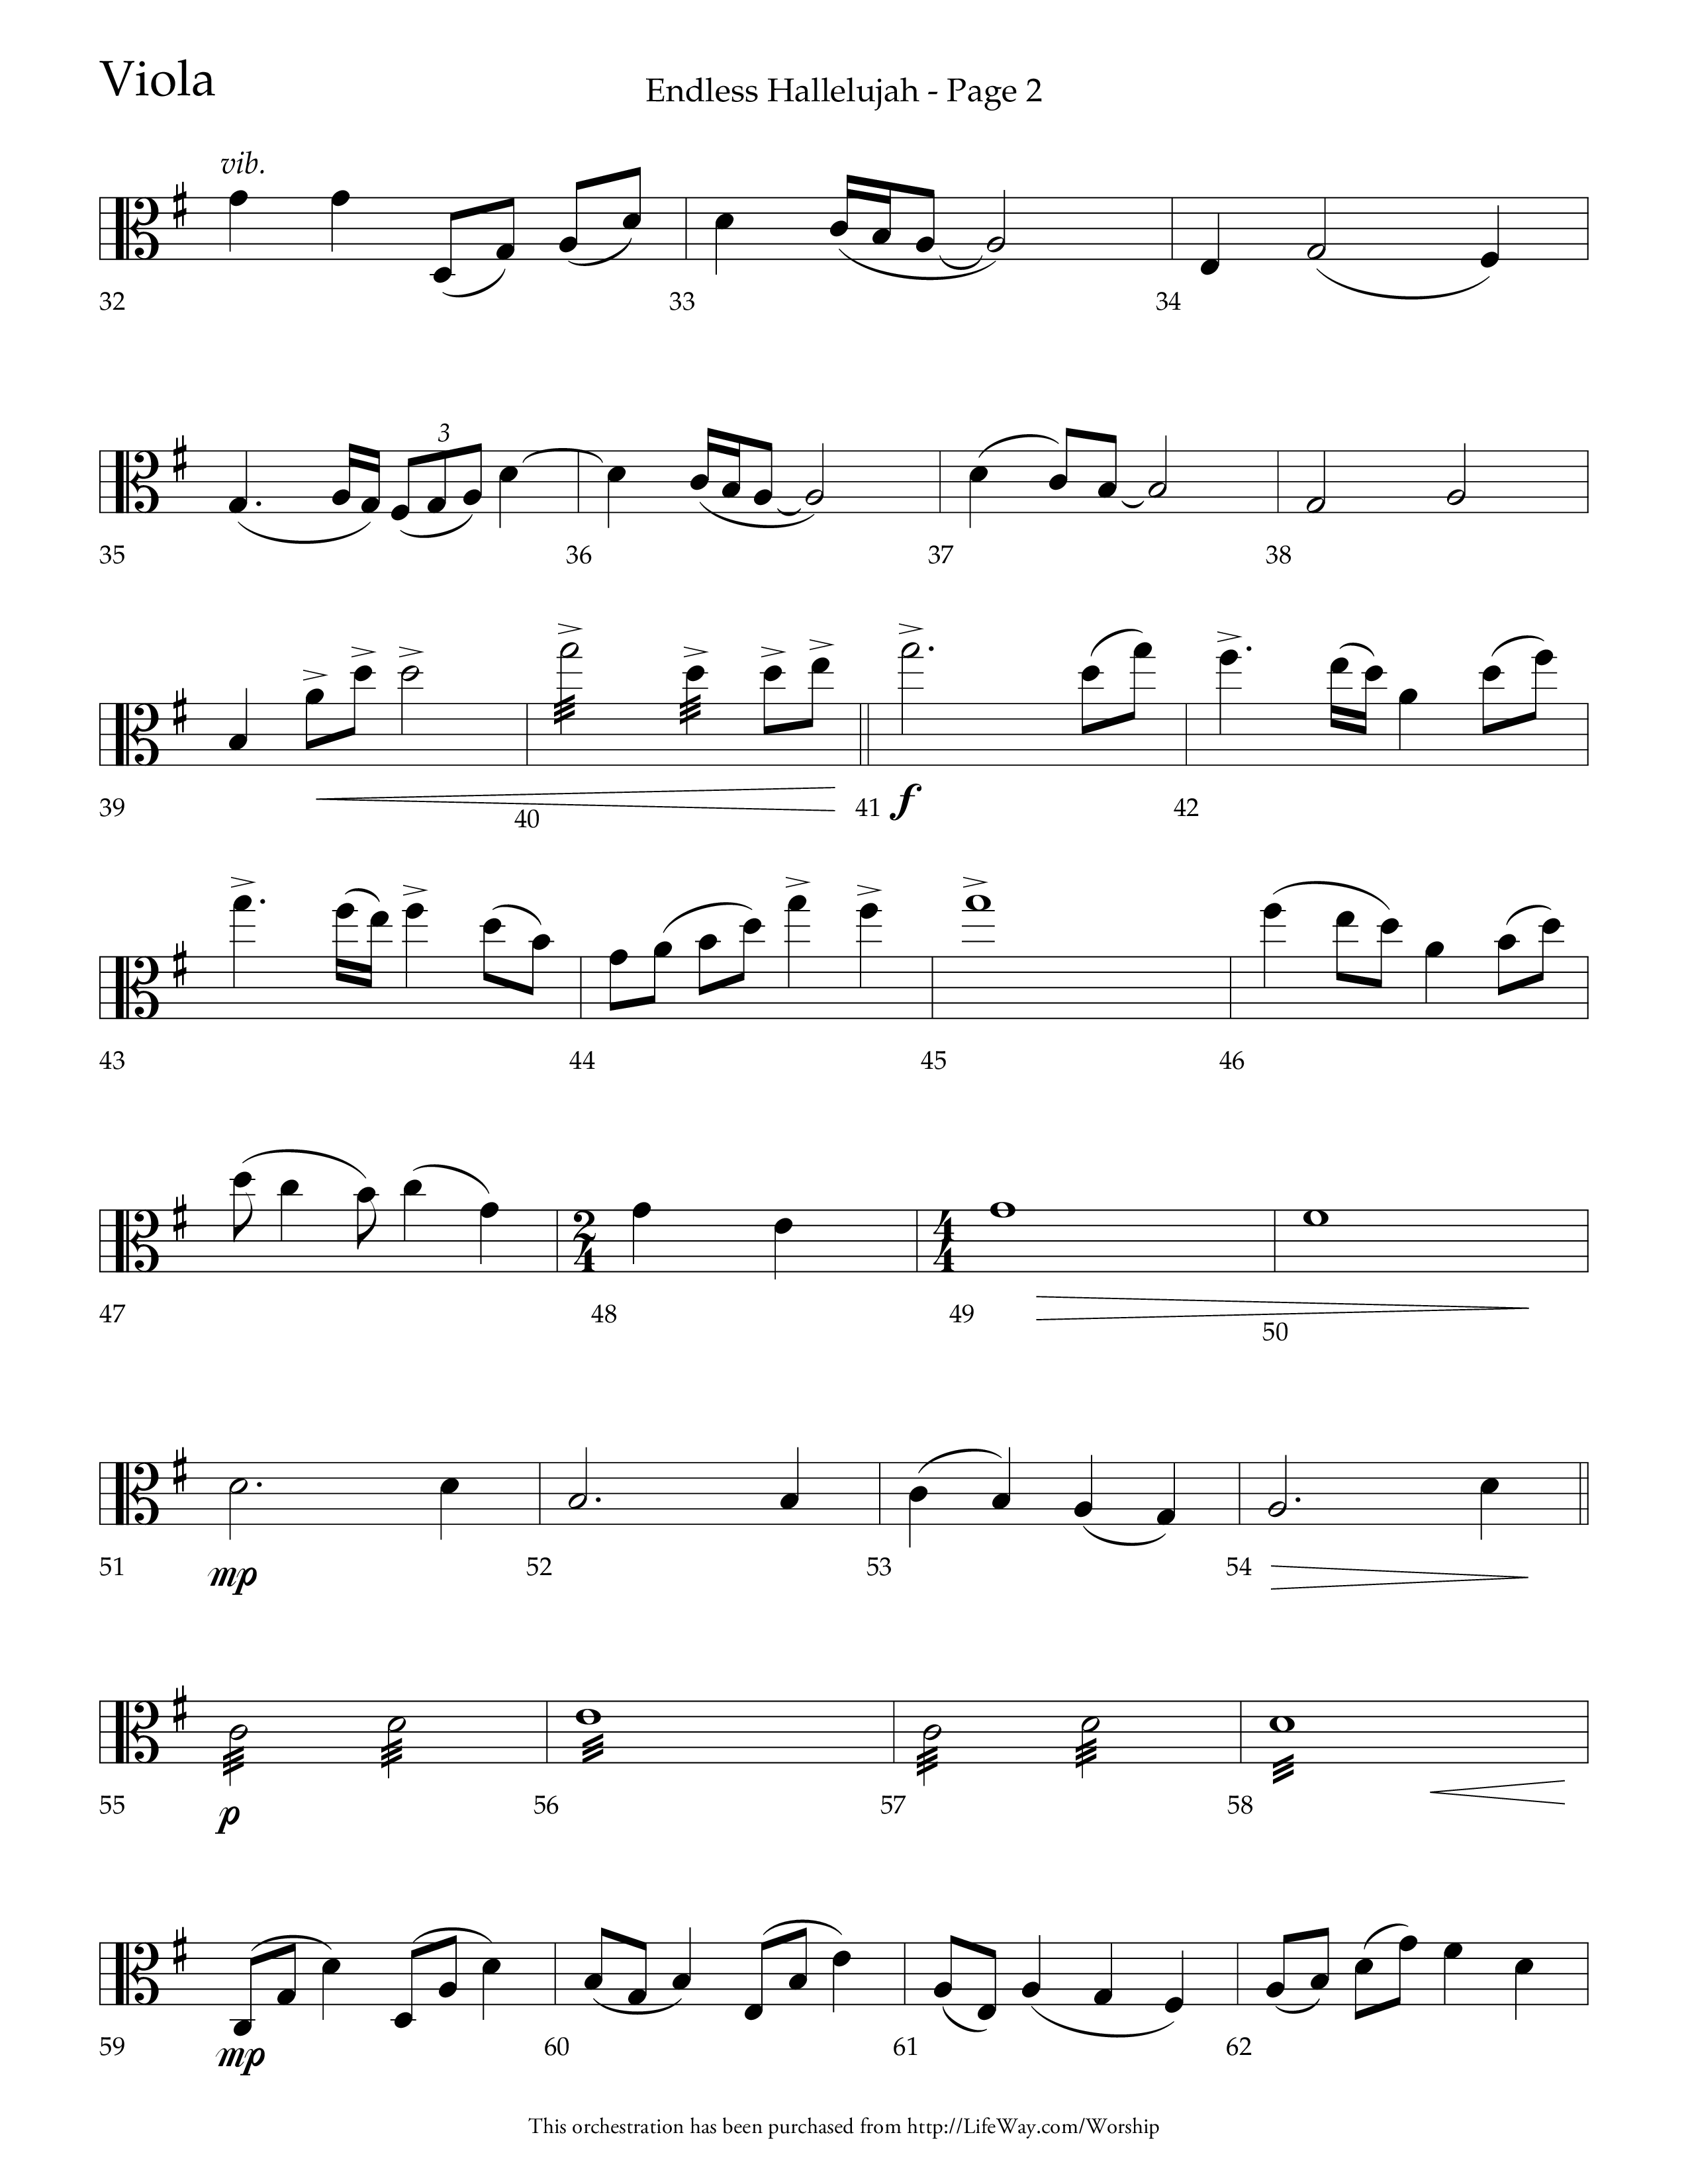 Endless Hallelujah (Choral Anthem SATB) Viola (Lifeway Choral / Arr. Tom Fettke / Arr. Thomas Grassi / Orch. Michael Lawrence)